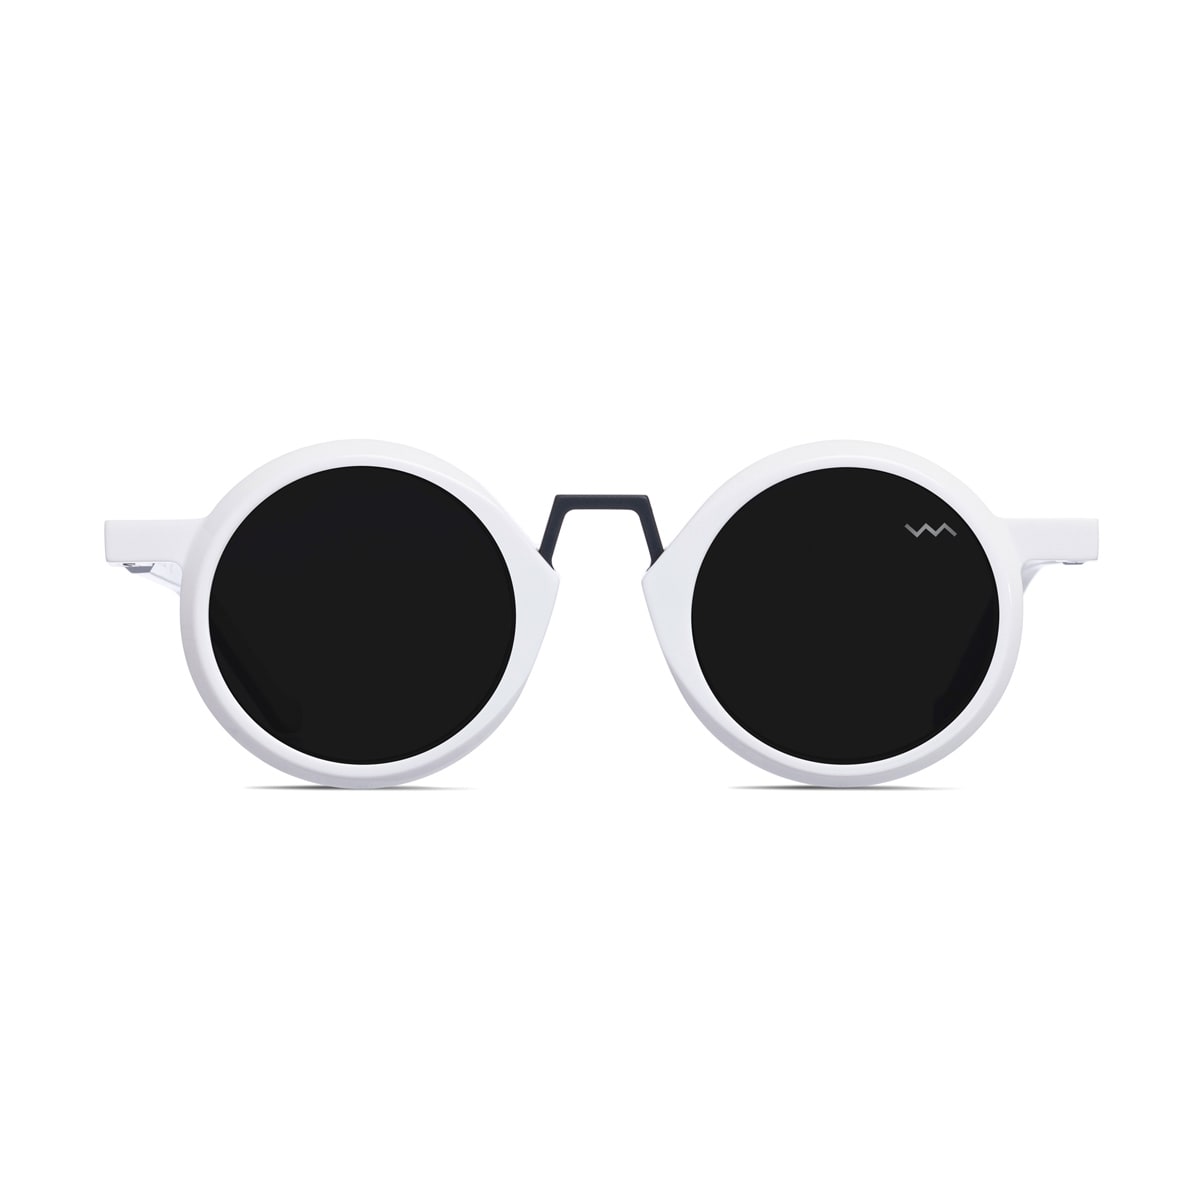 Wl0044 White Label White Sunglasses